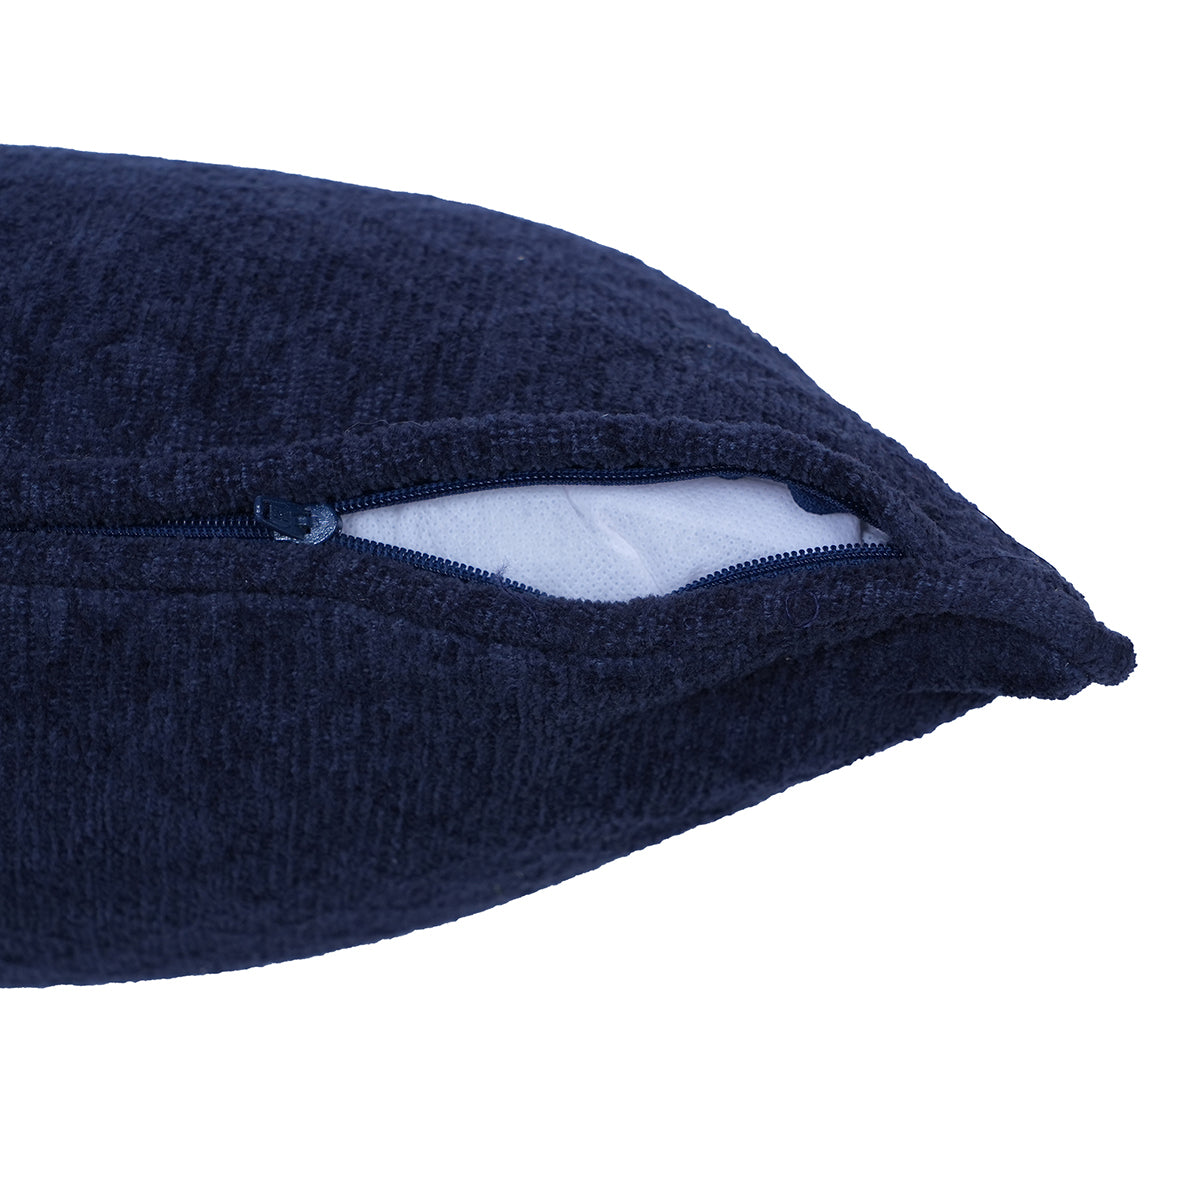 Blaize 100% Cotton Solid Weave Blue Cushion Cover